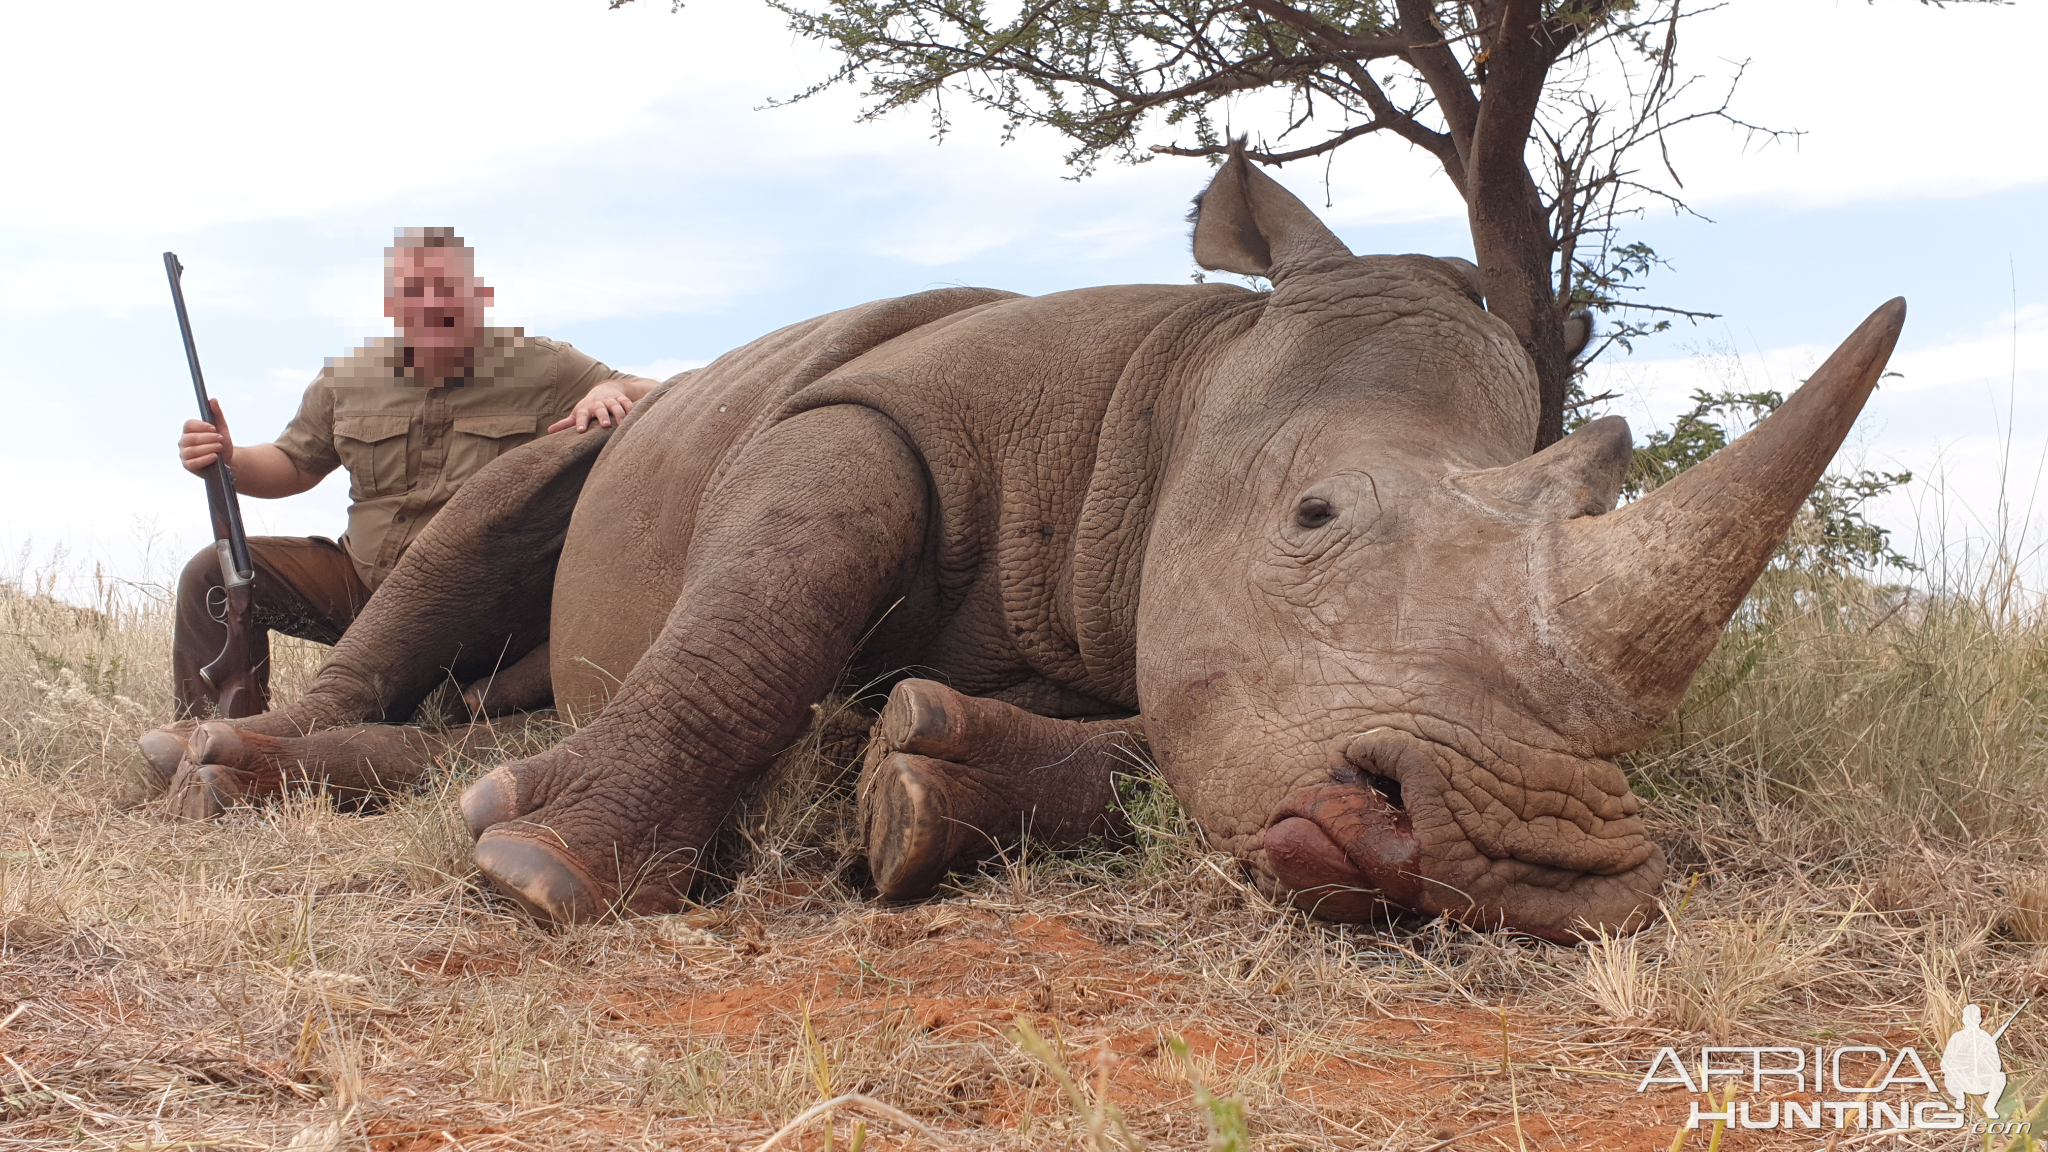 South Africa Hunting White Rhino